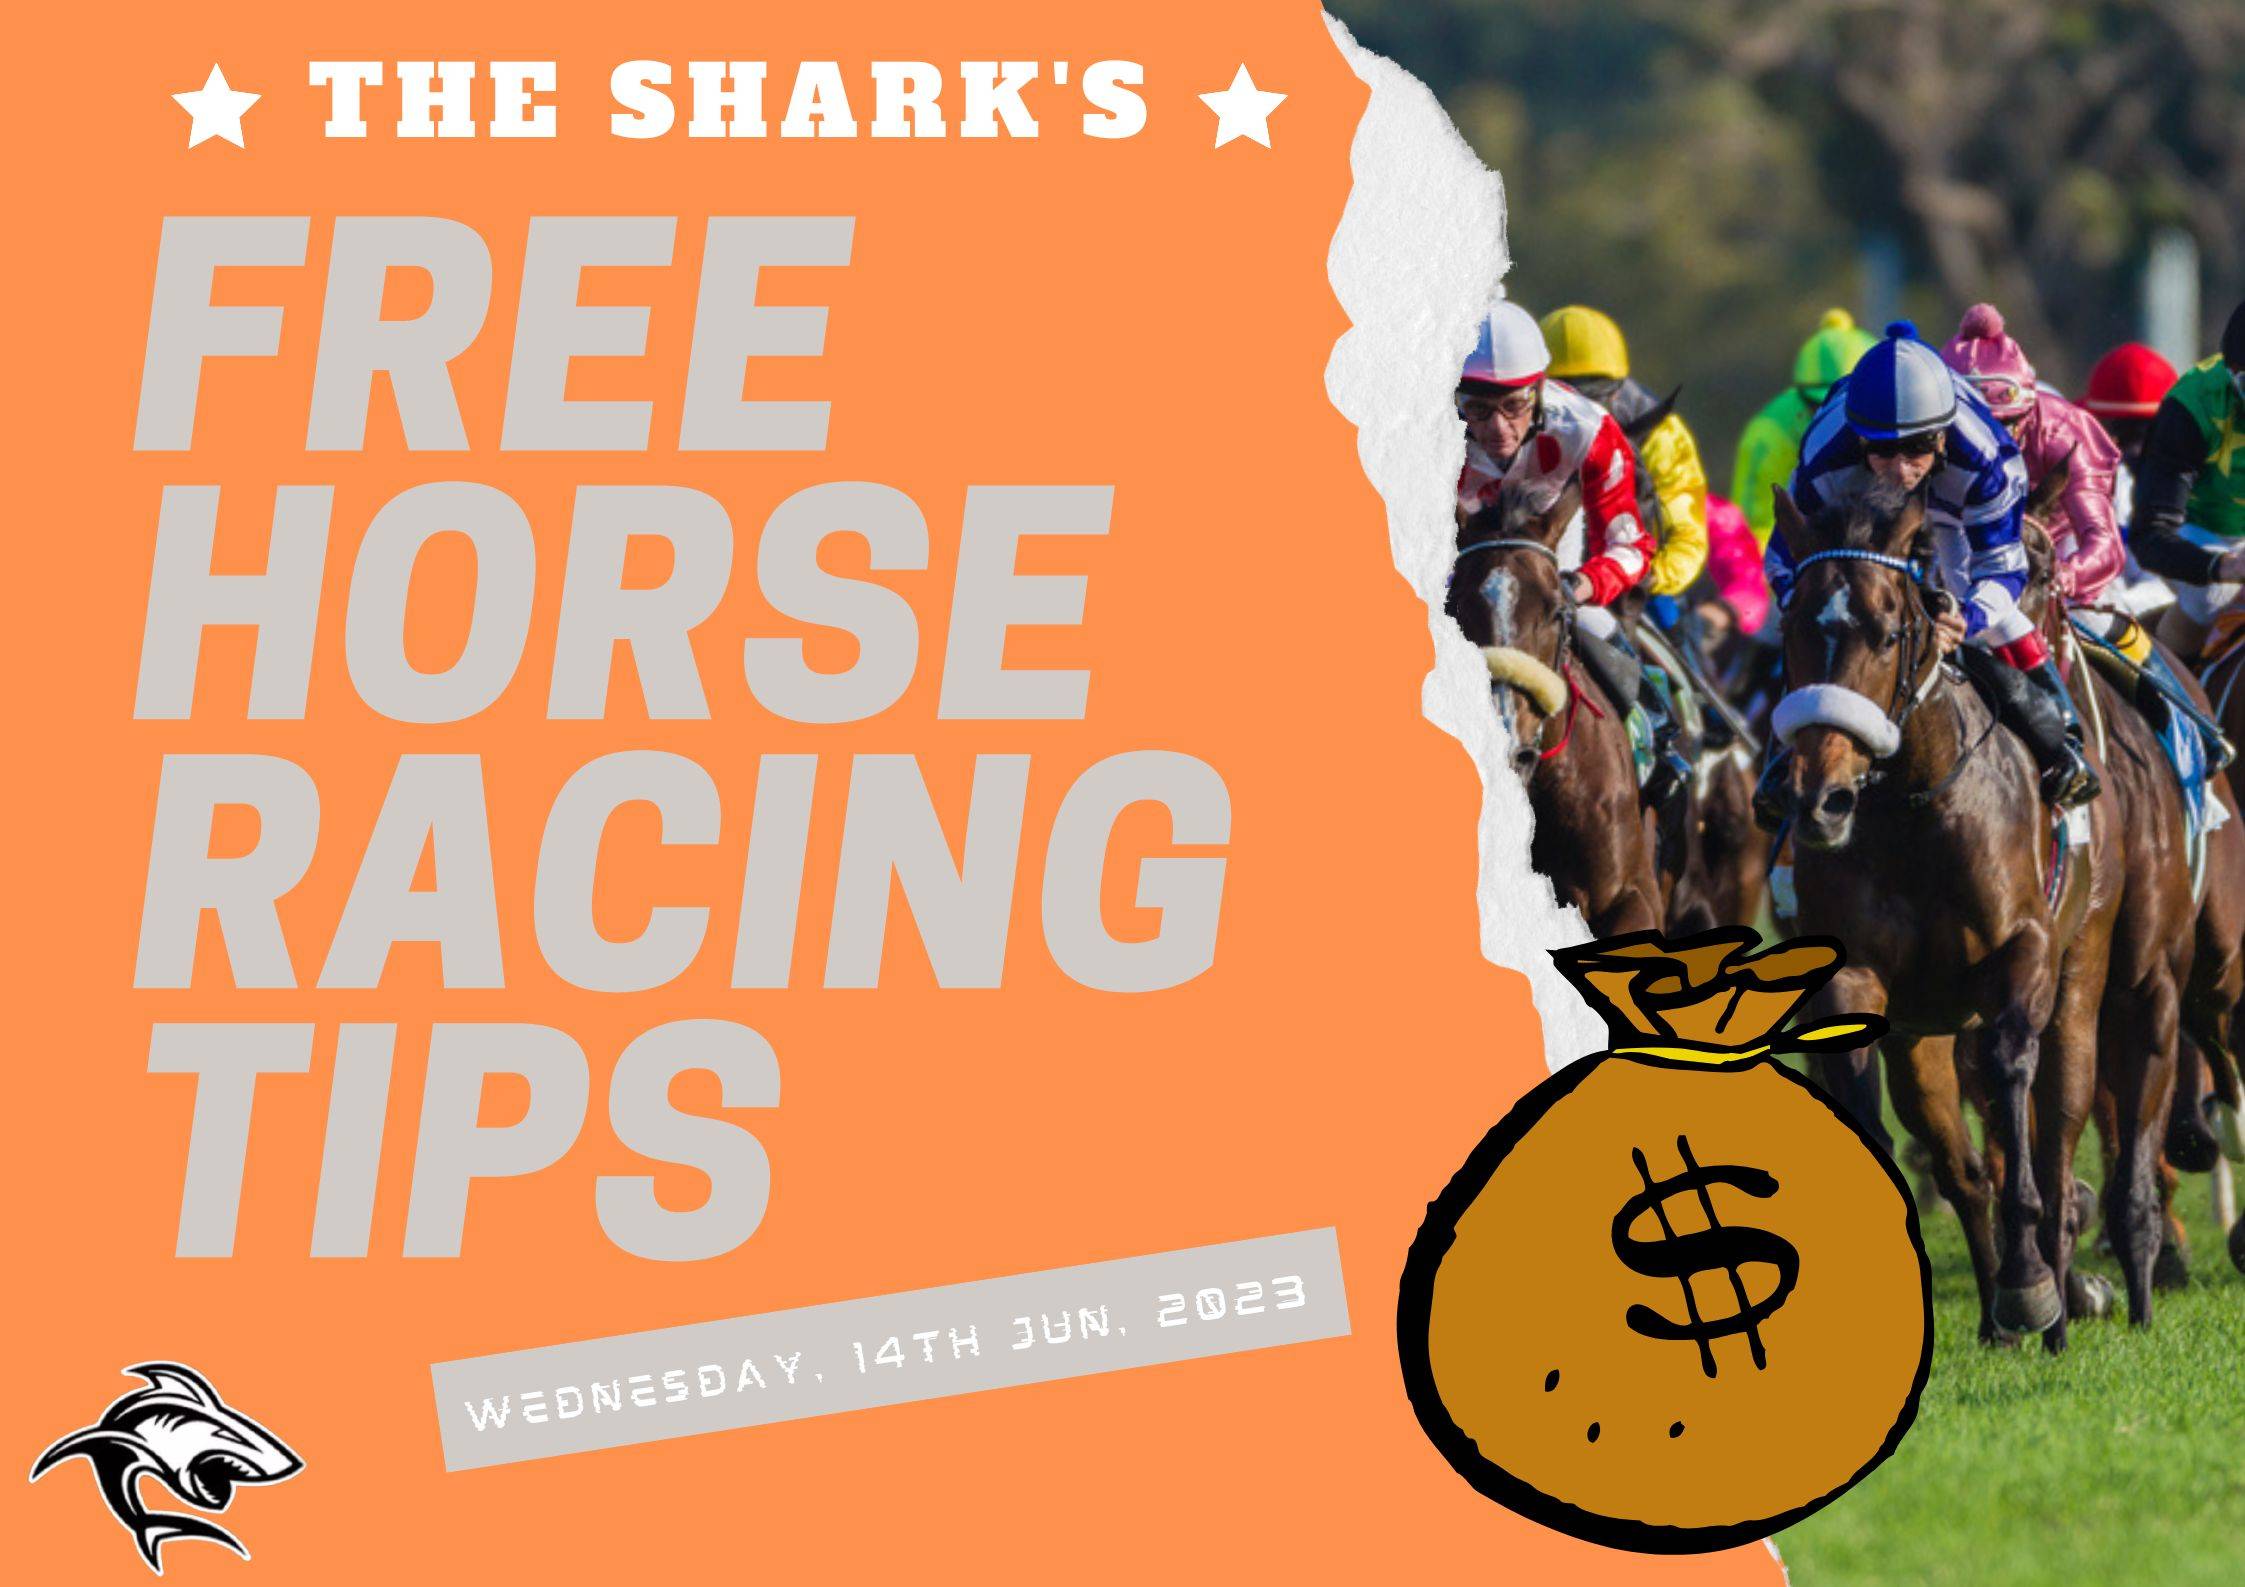 Free Horse Racing Tips - 14th Jun